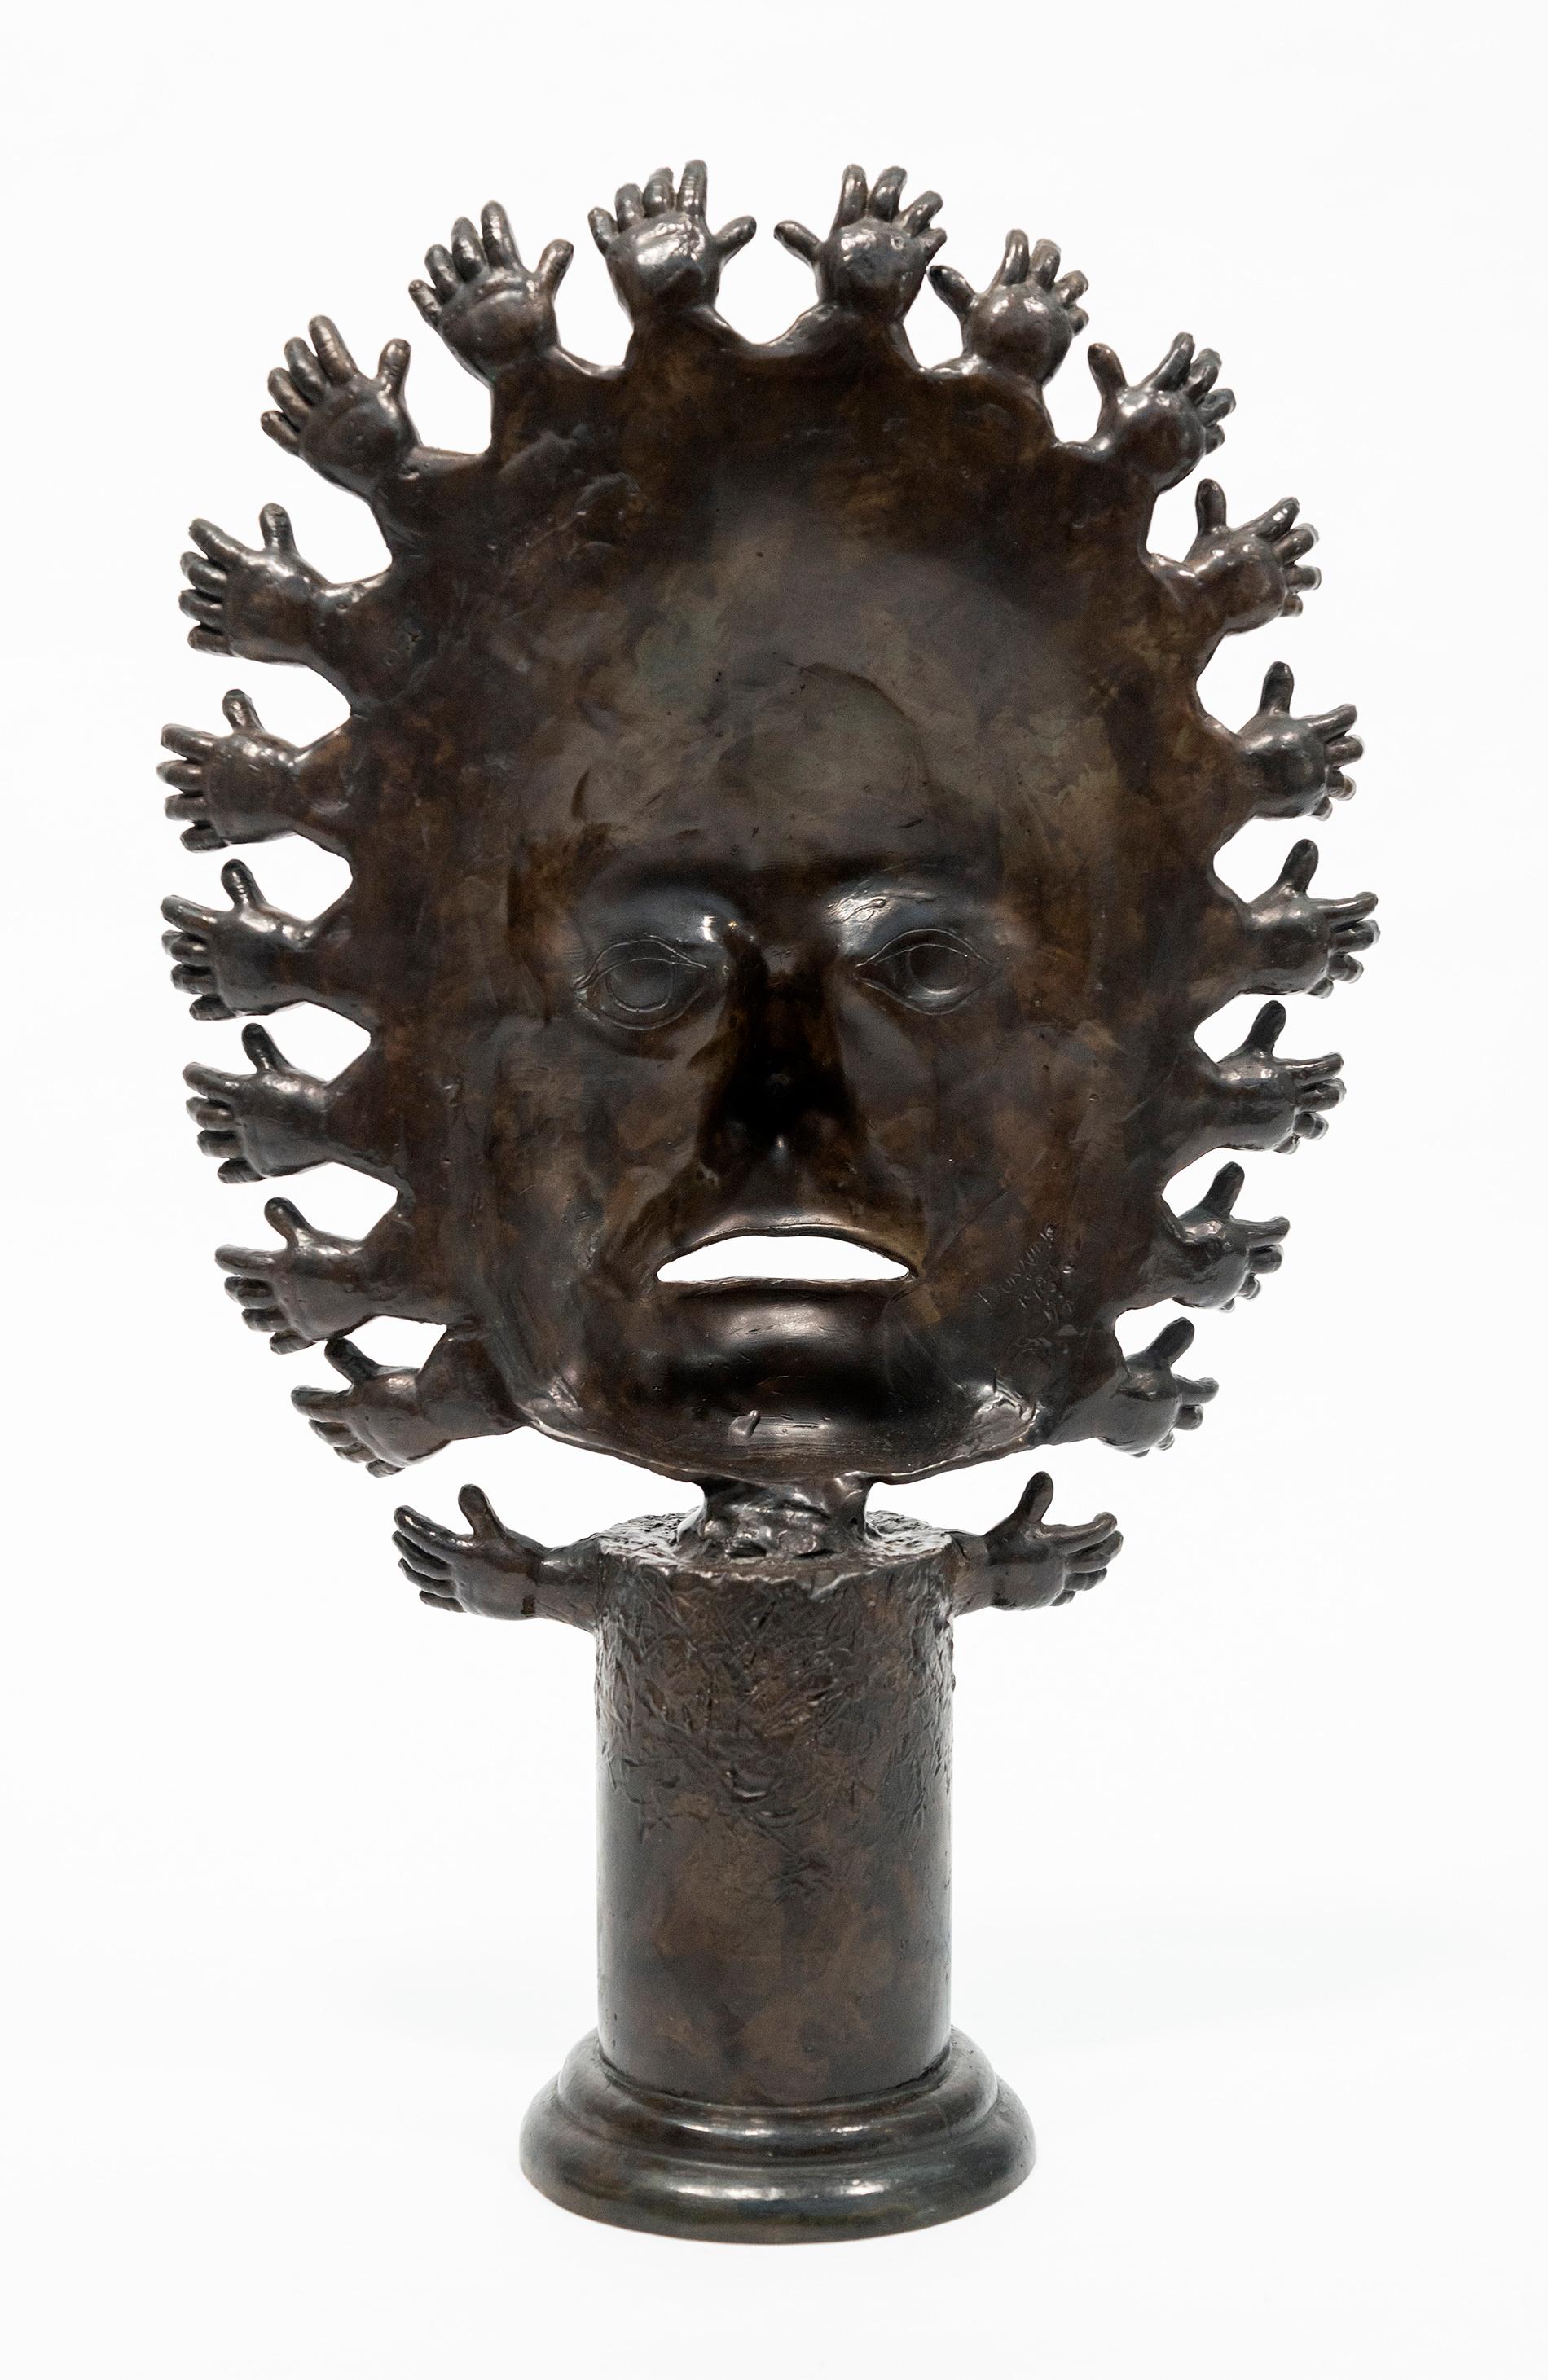 Benediction - figurative, face, hands, mask, tribal, cast bronze sculpture For Sale 7